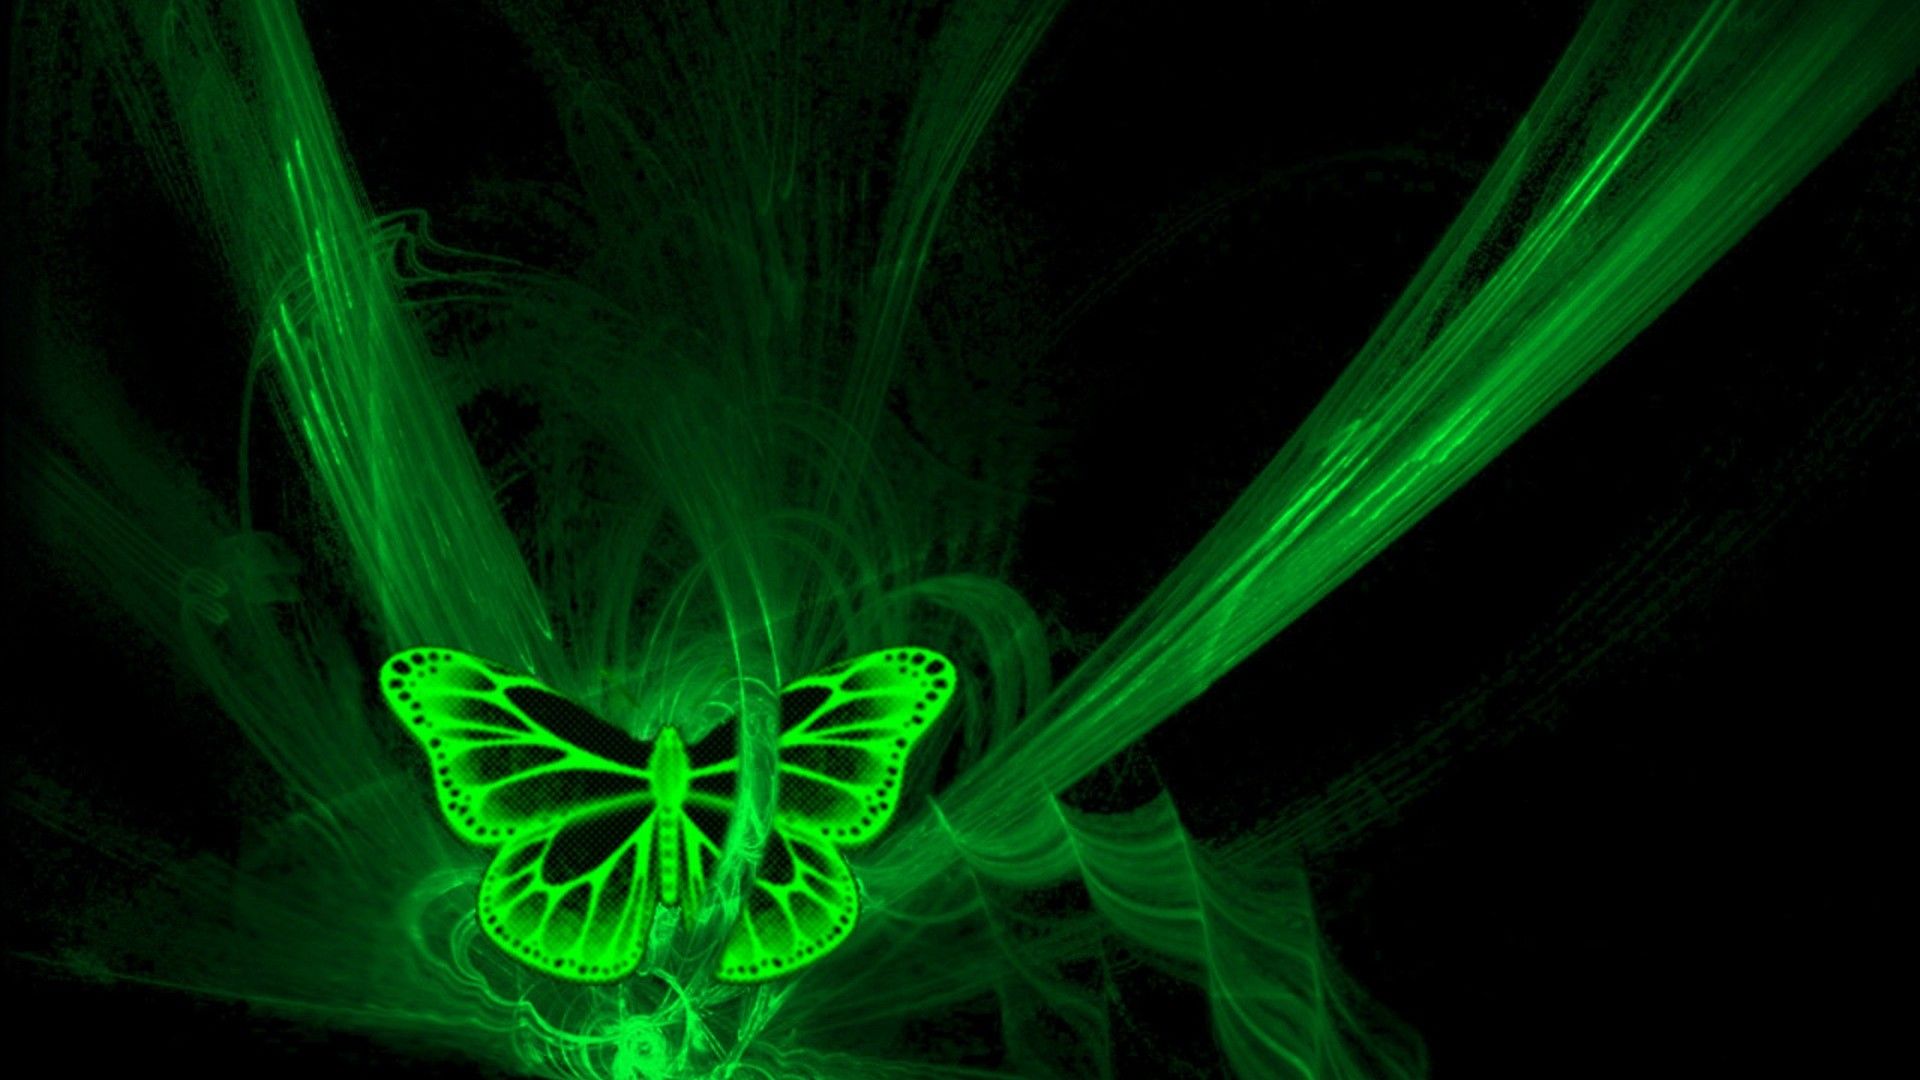 Neon Art Windows 8.1 Themes and Wallpaper. Butterfly wallpaper, Neon wallpaper, Green butterfly